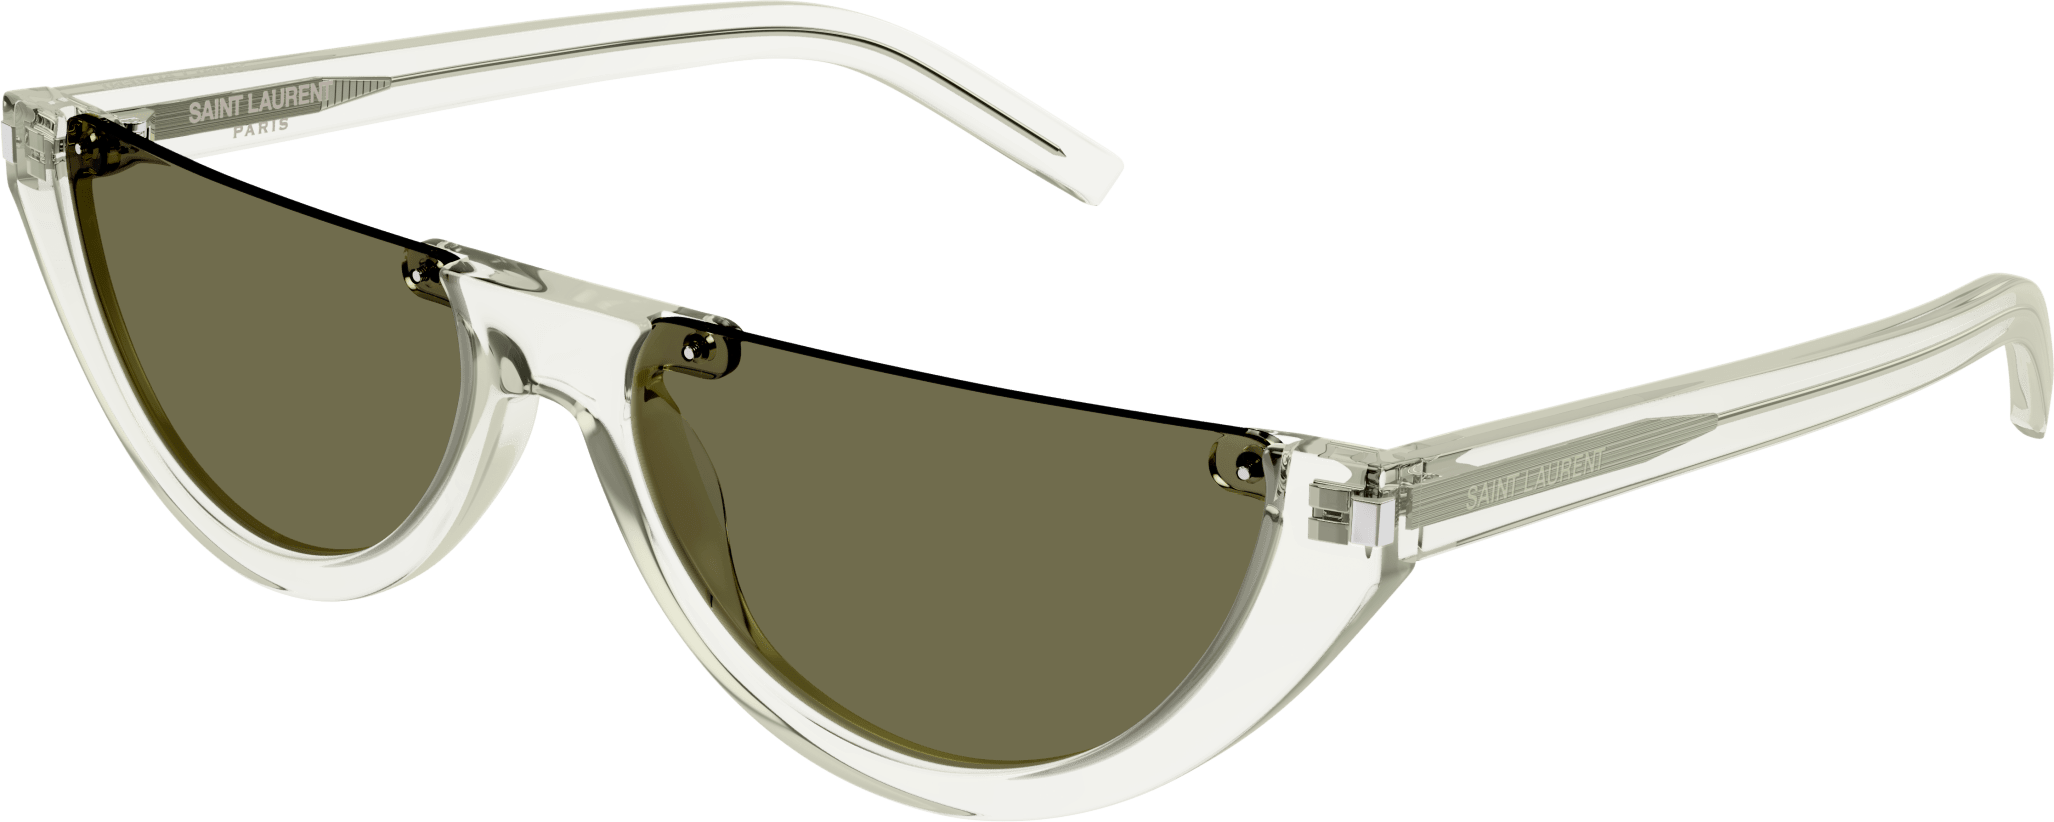 SL 563 cat-eye sunglasses